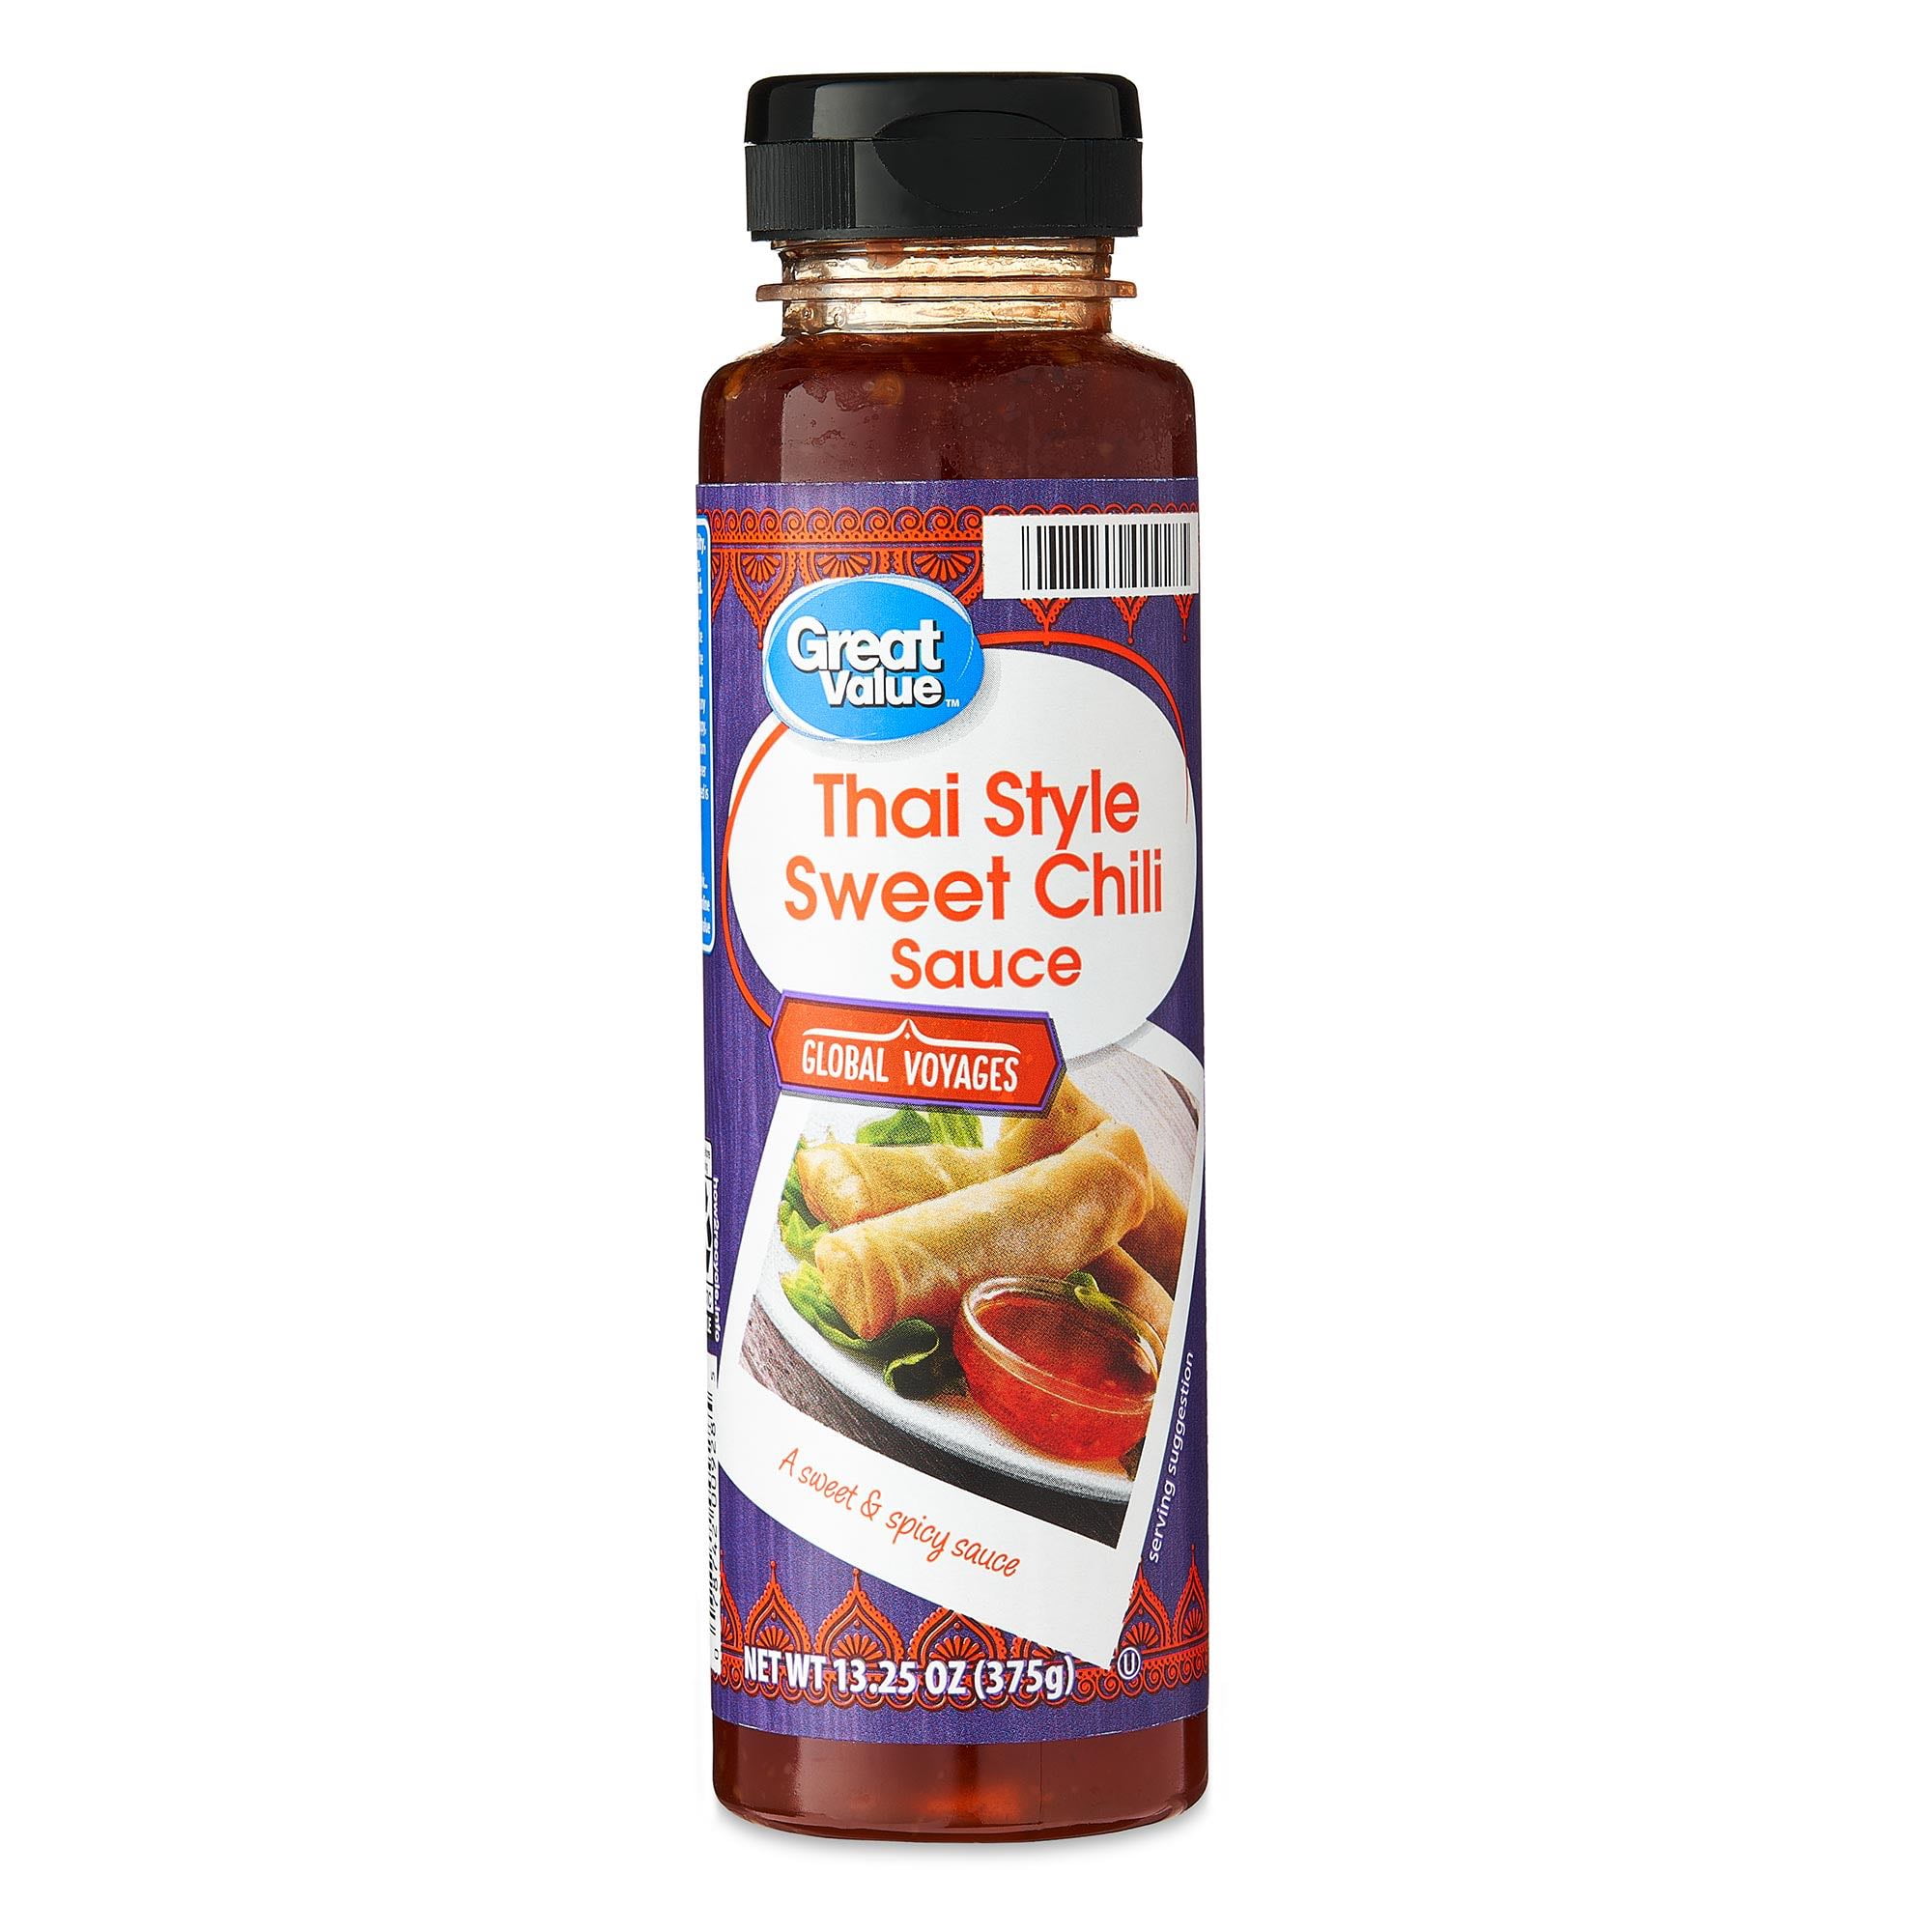 Great Value Thai Style Sweet Chili Sauce, 13.25 oz